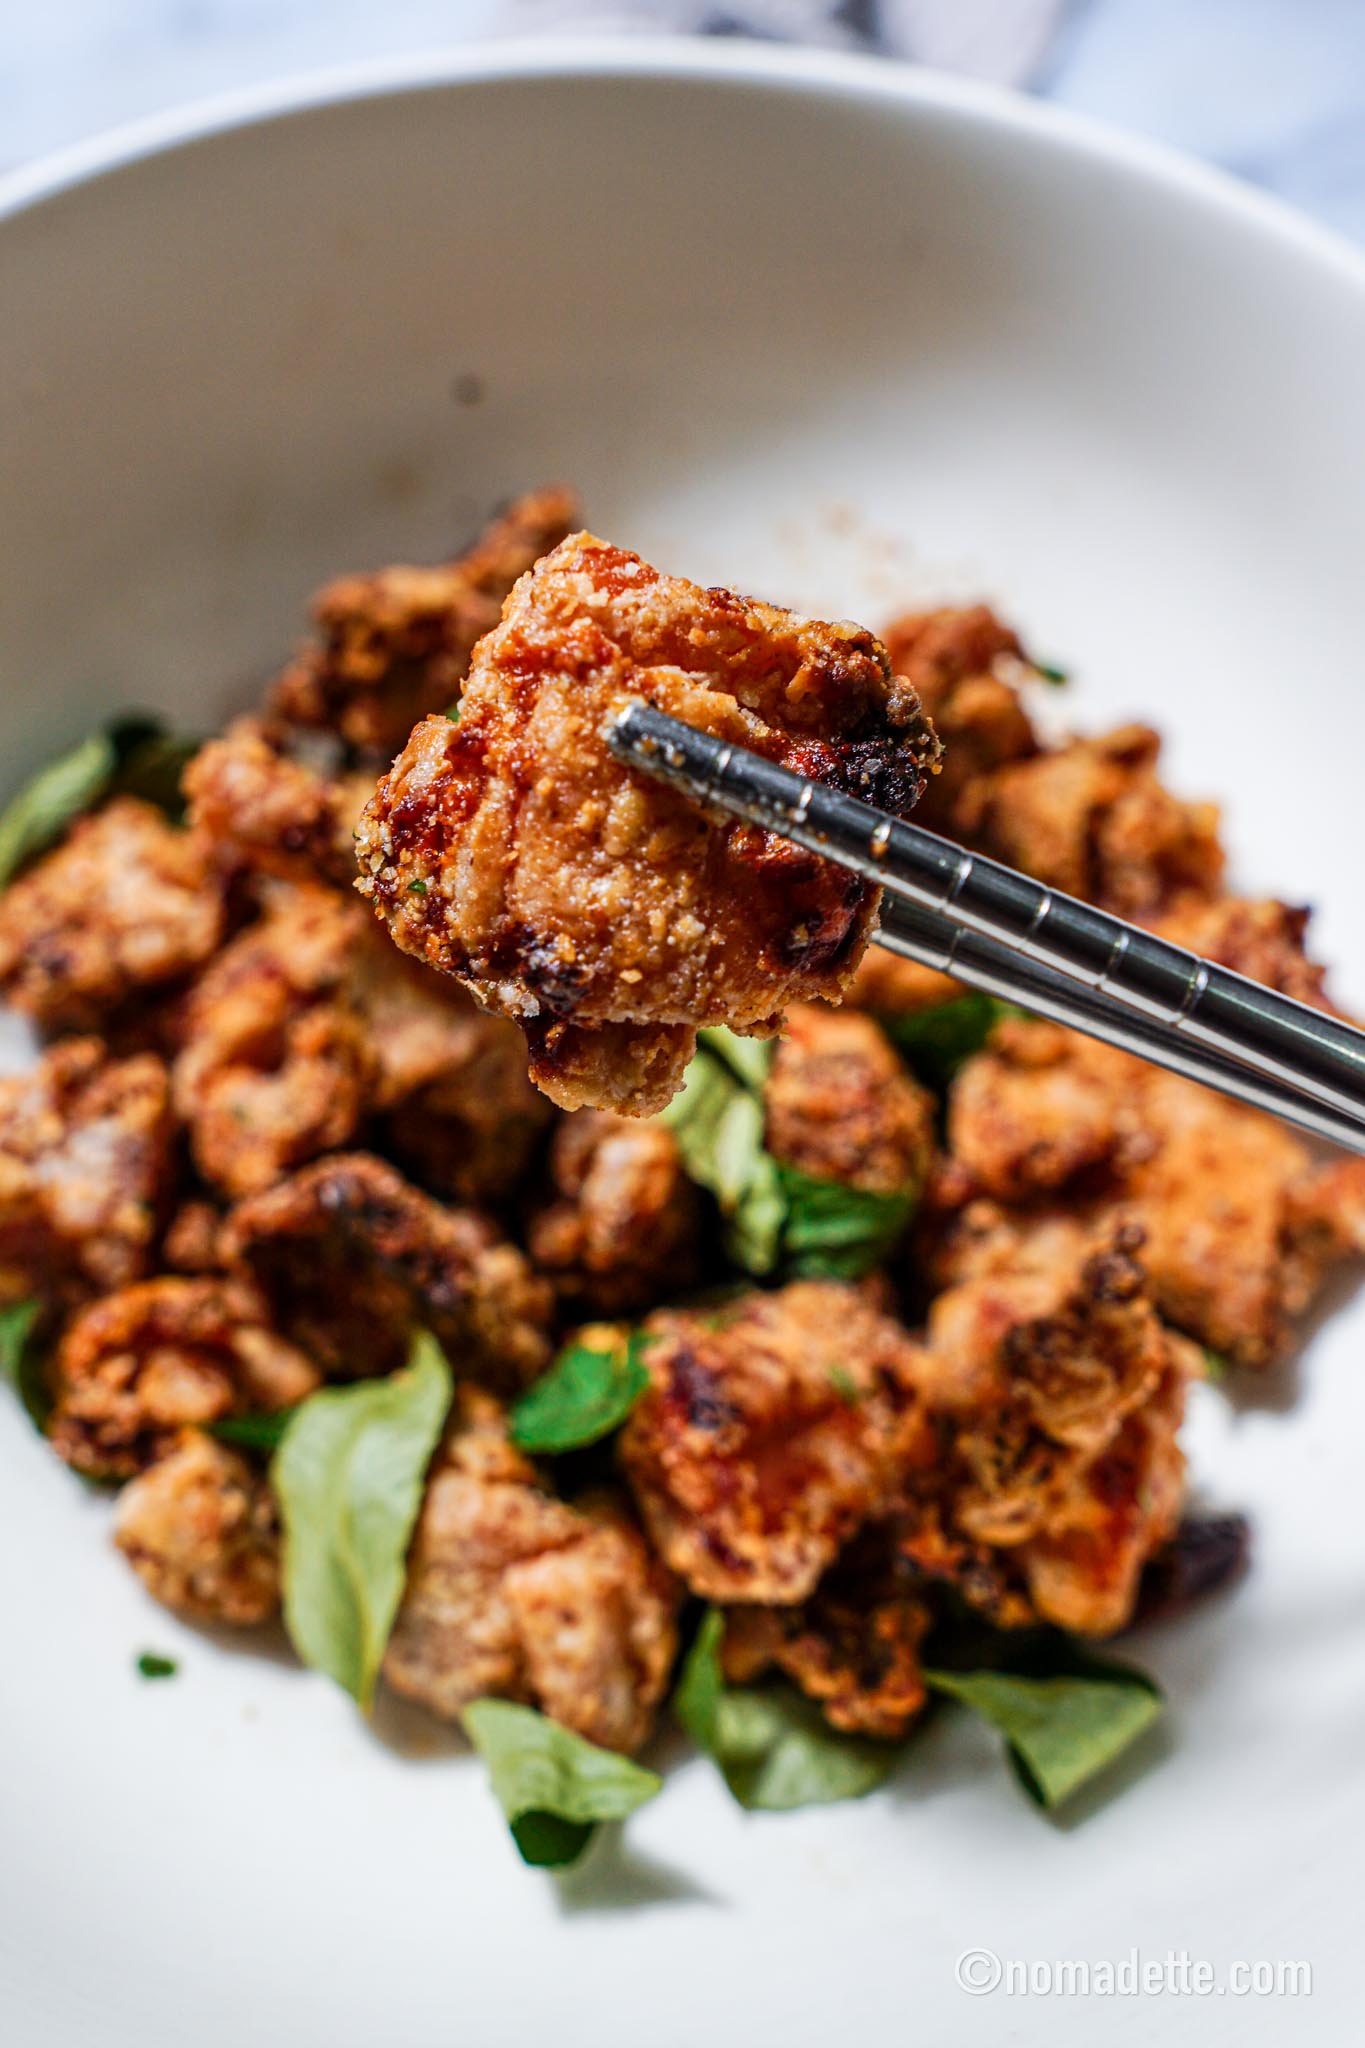 Air Fryer Salt and Pepper Chicken - Omnivore's Cookbook